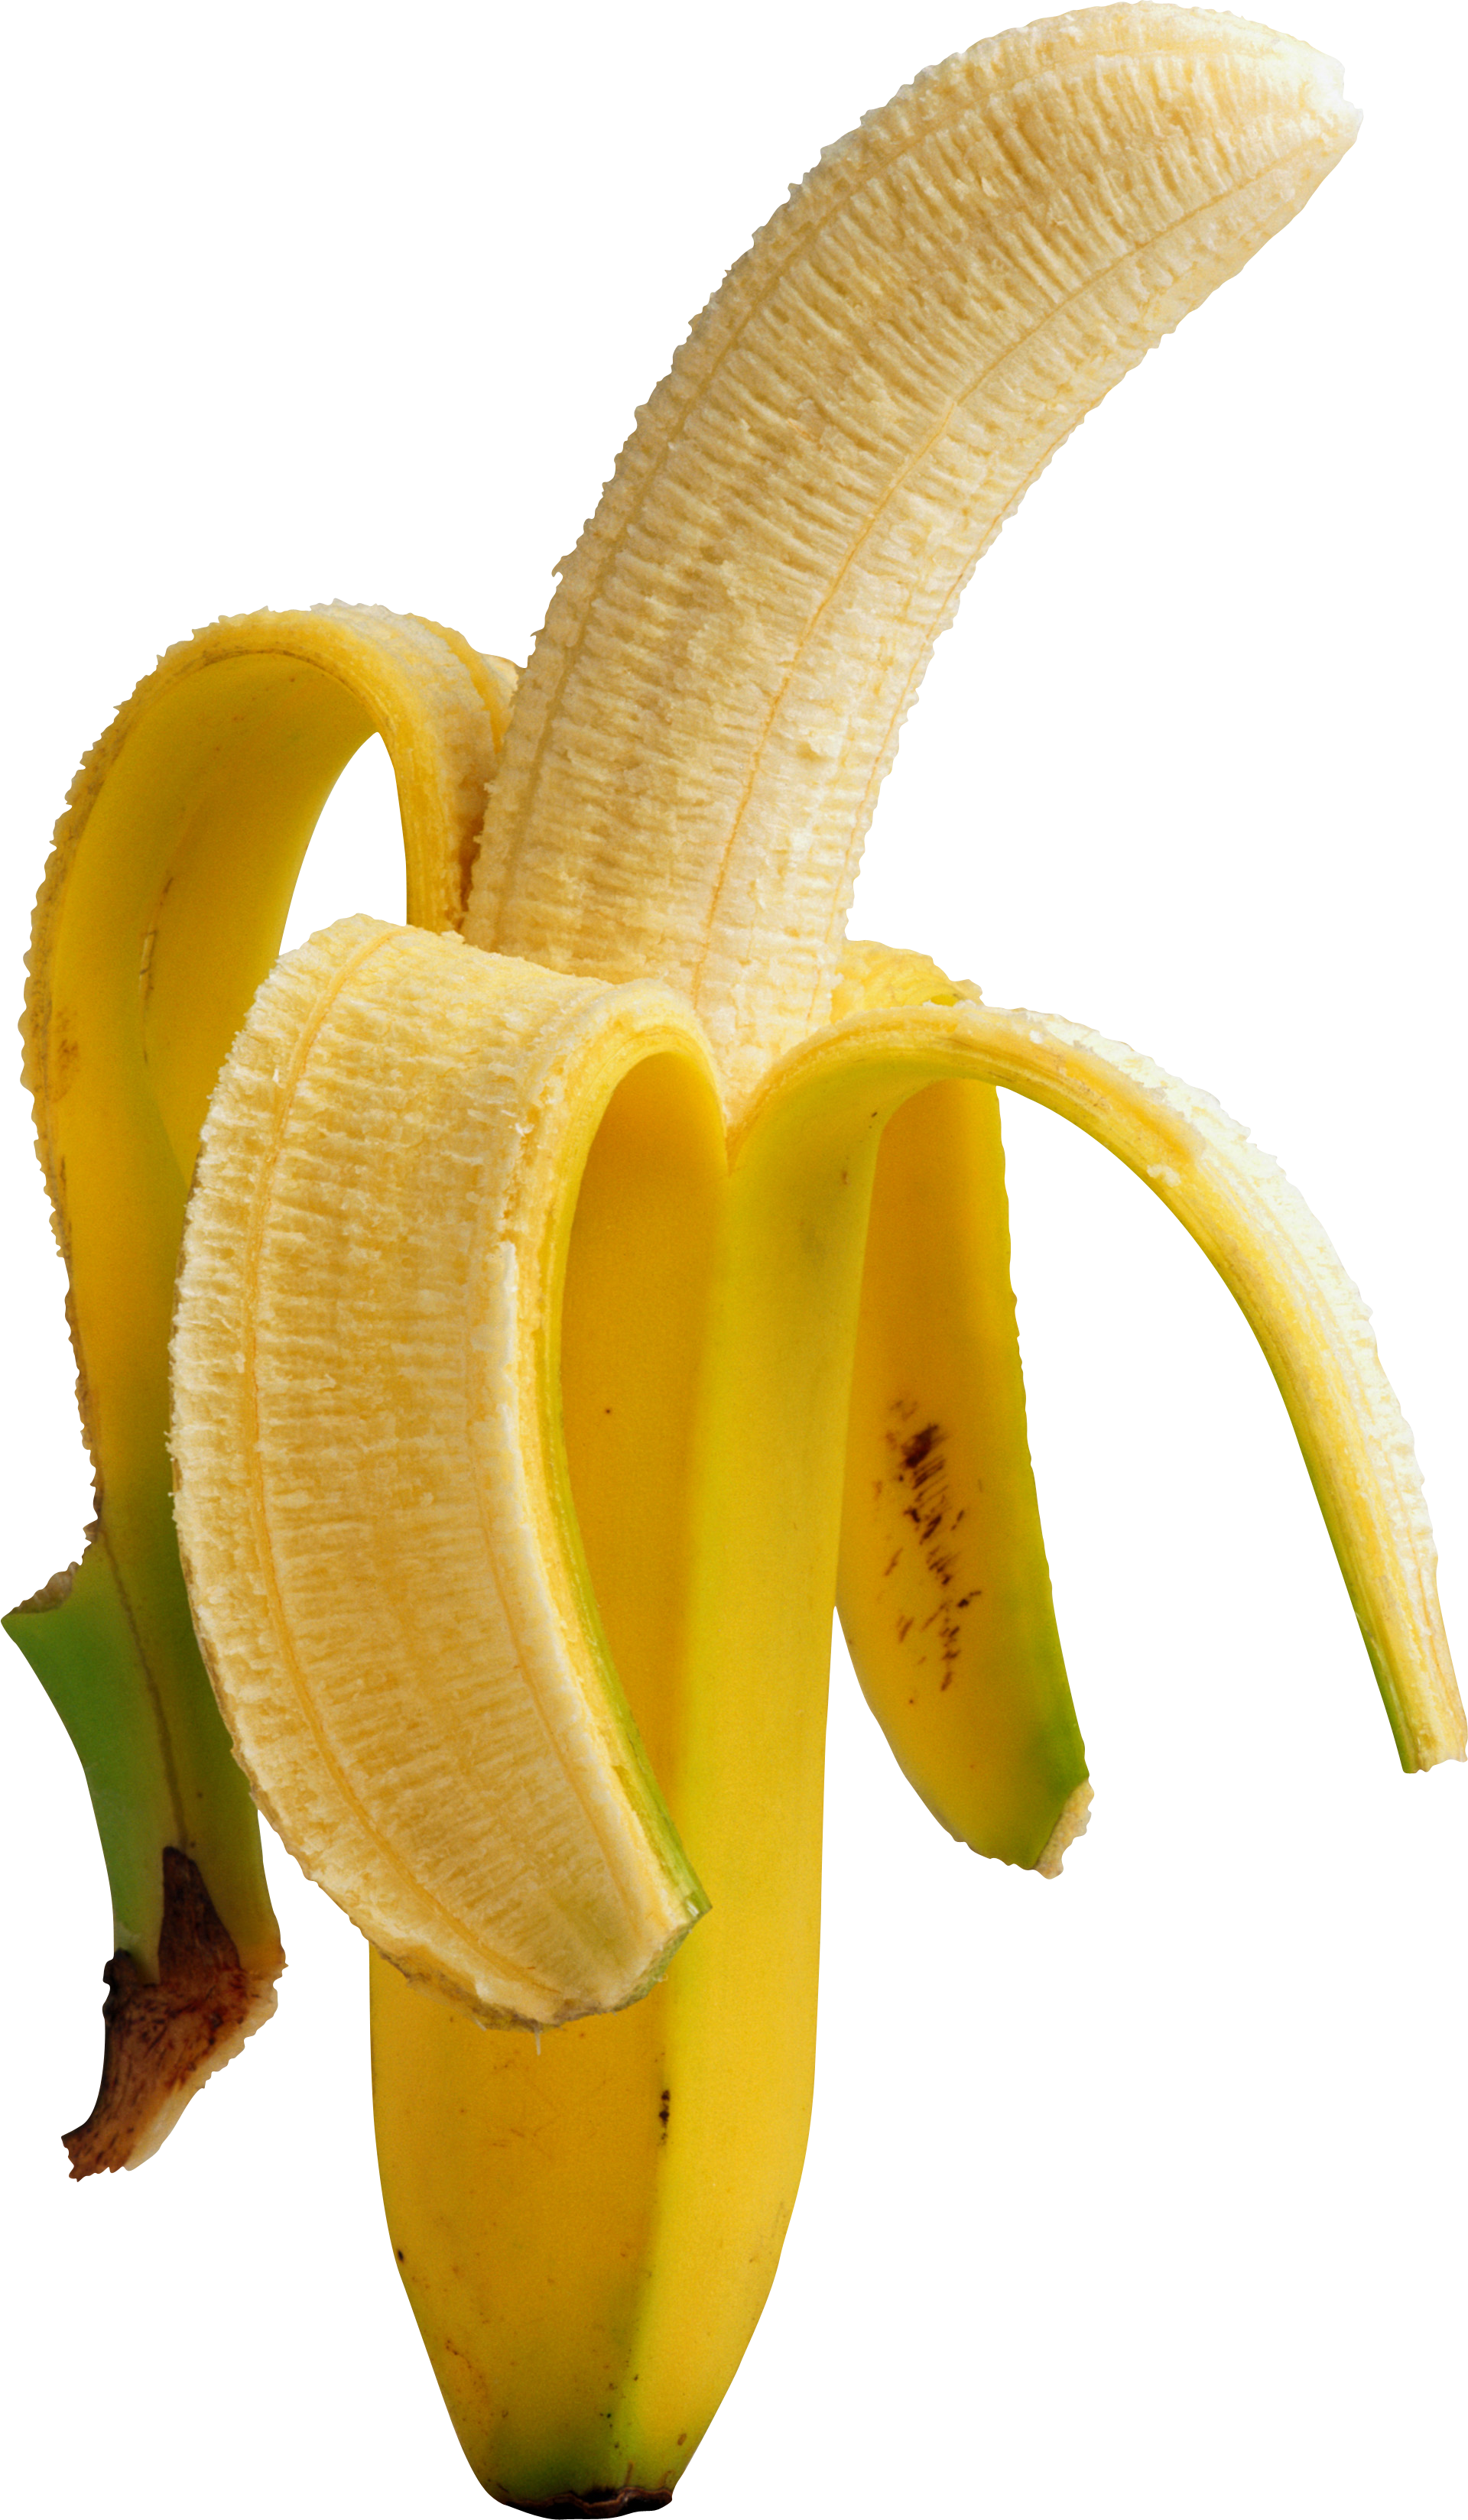 Banana PNG Transparent Images Download - PNG Packs